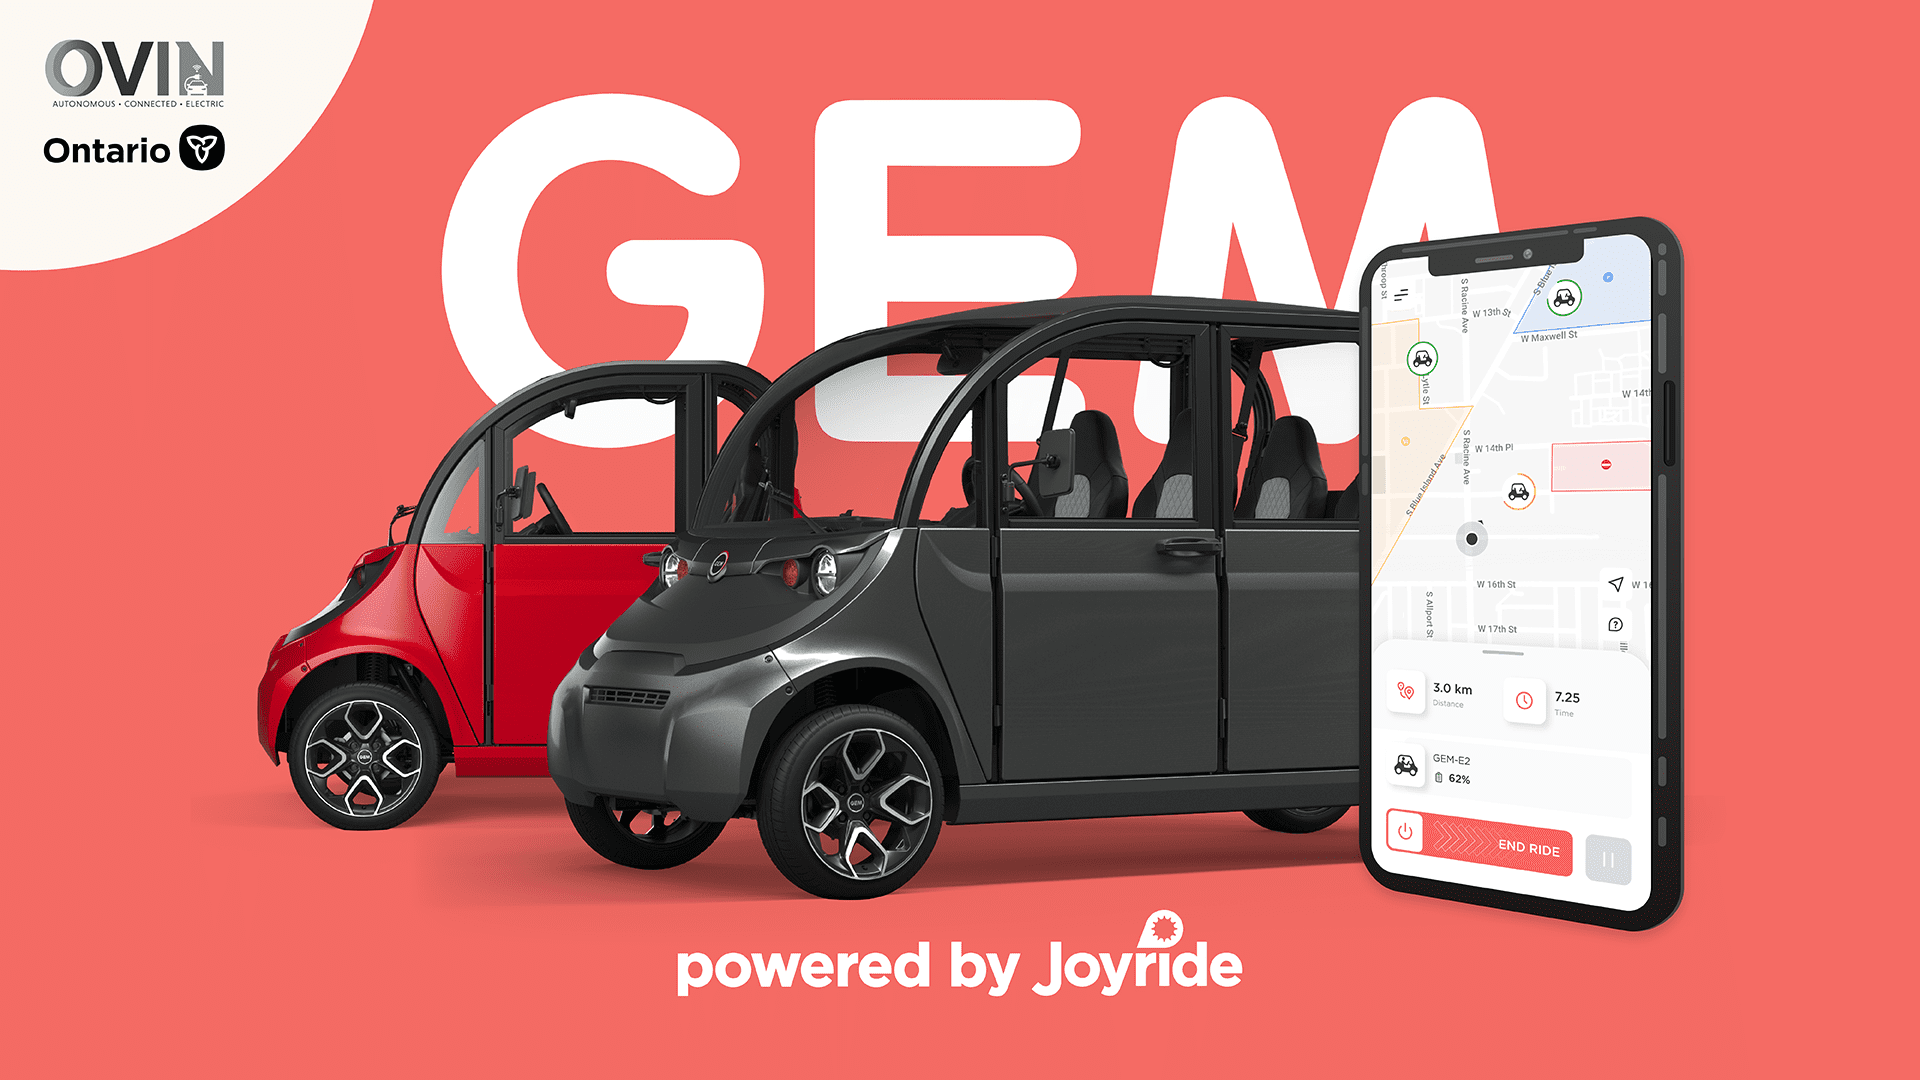 Joyride revolutionizes Ontario’s urban mobility with OVIN partnership.